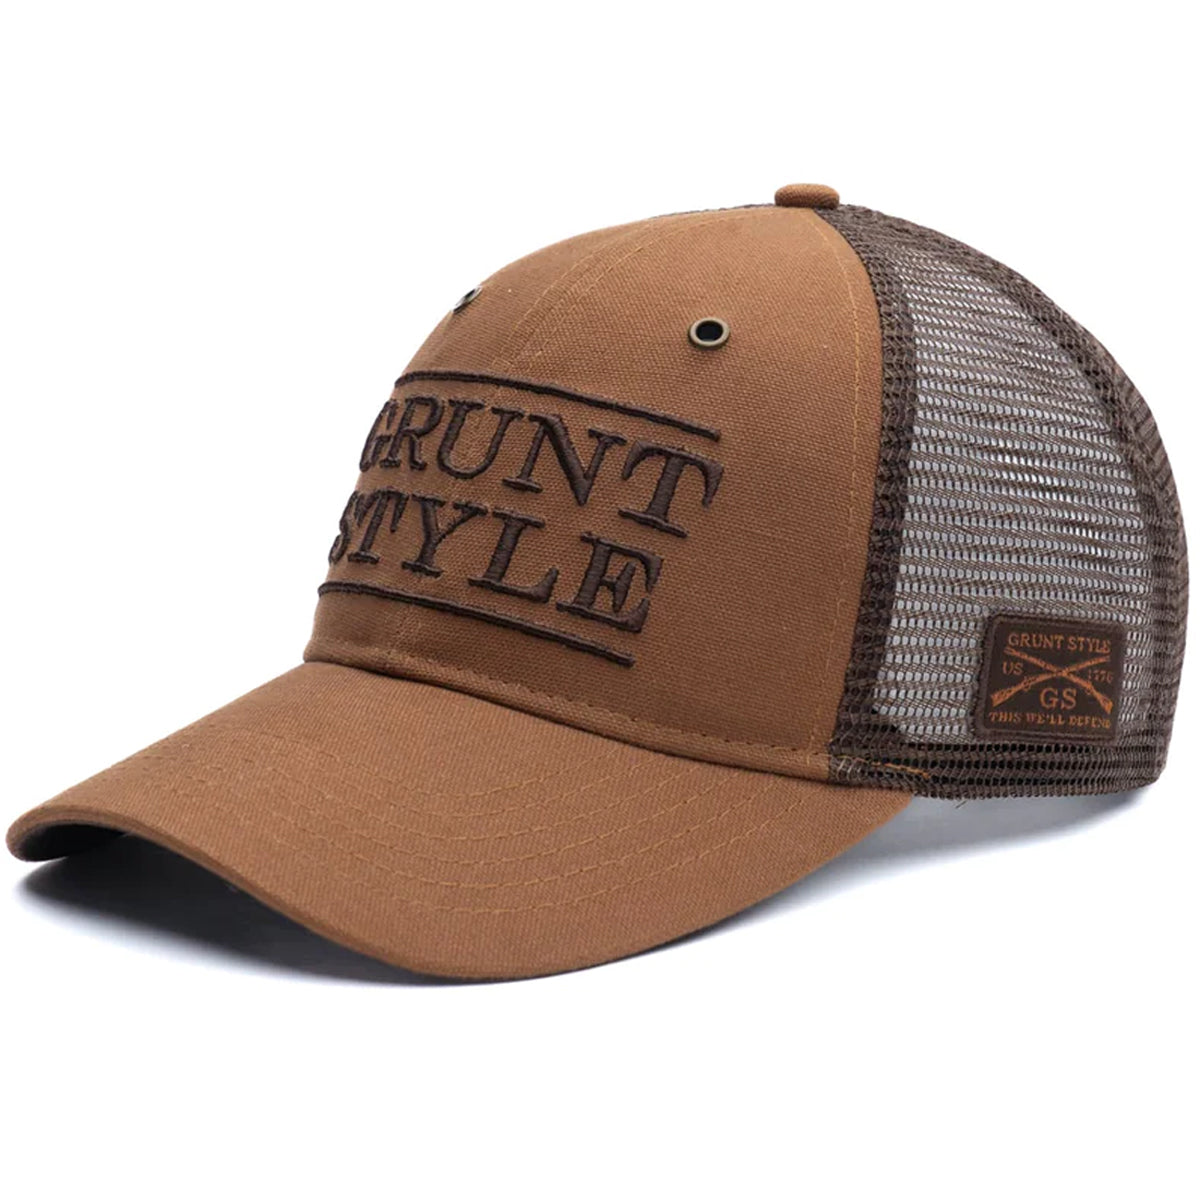 Grunt Style Stacked Logo Trucker Hat Grunt Style